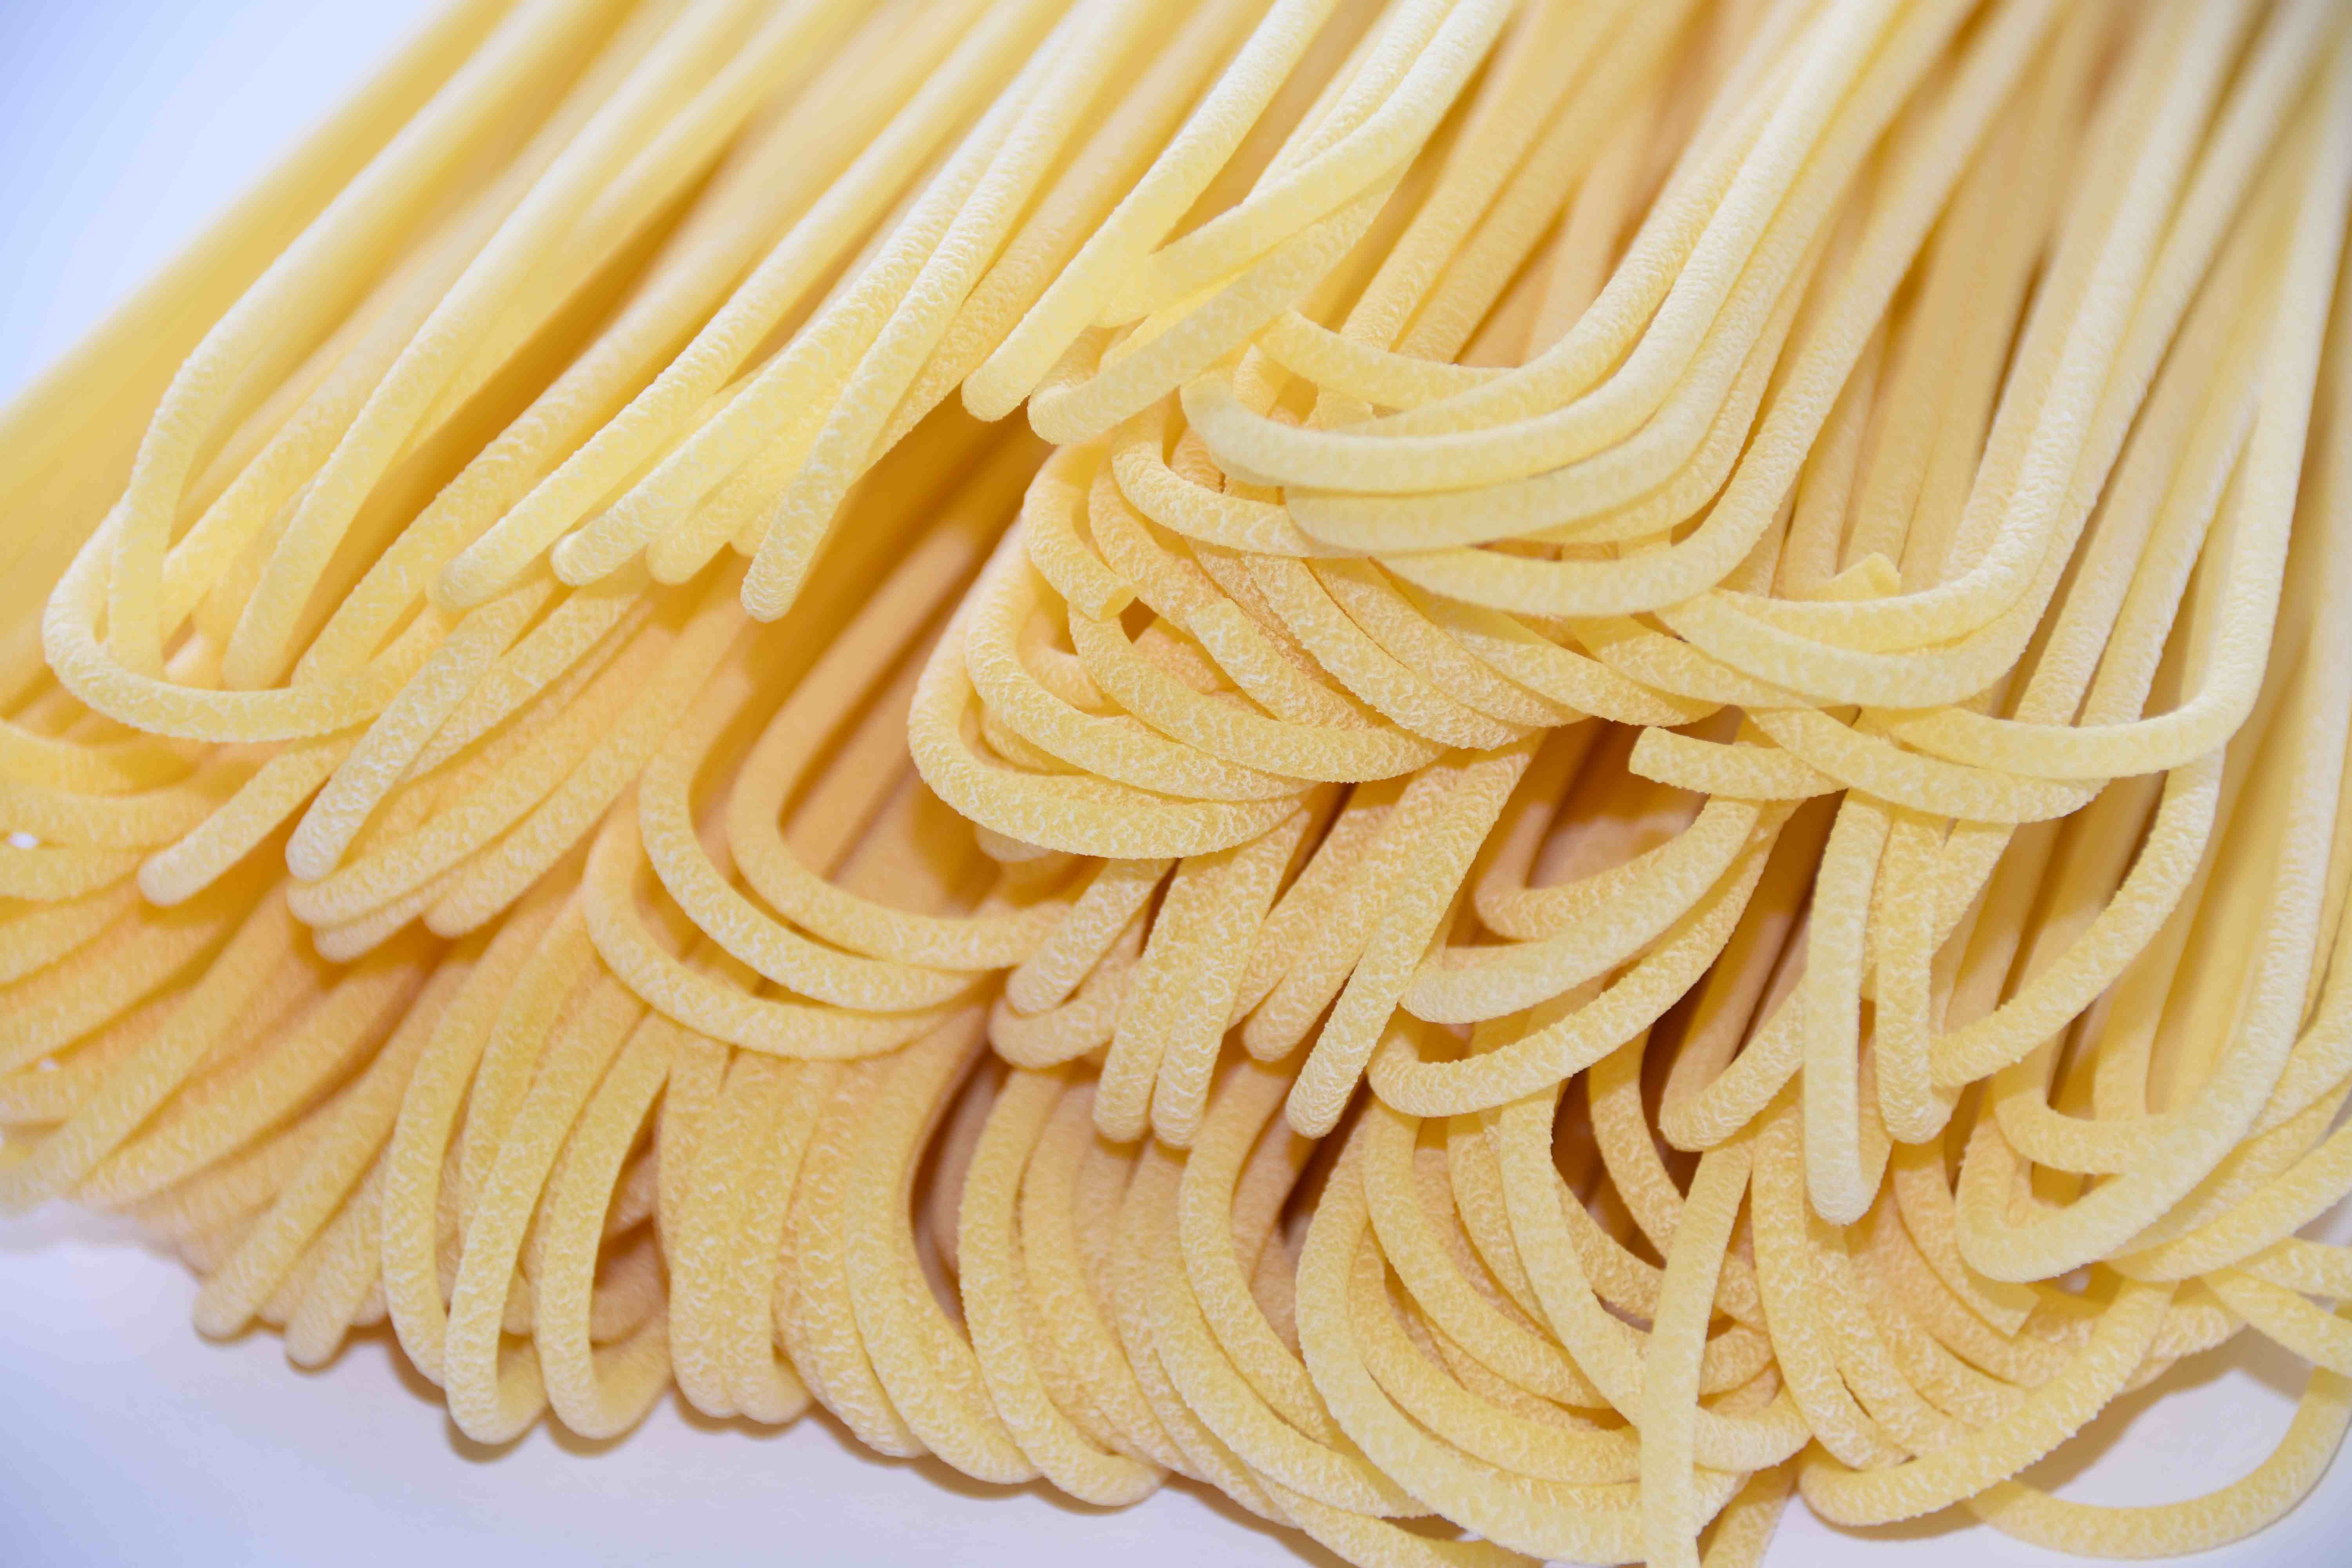 Pasta Lagano Spaghettoni 0,5 kg